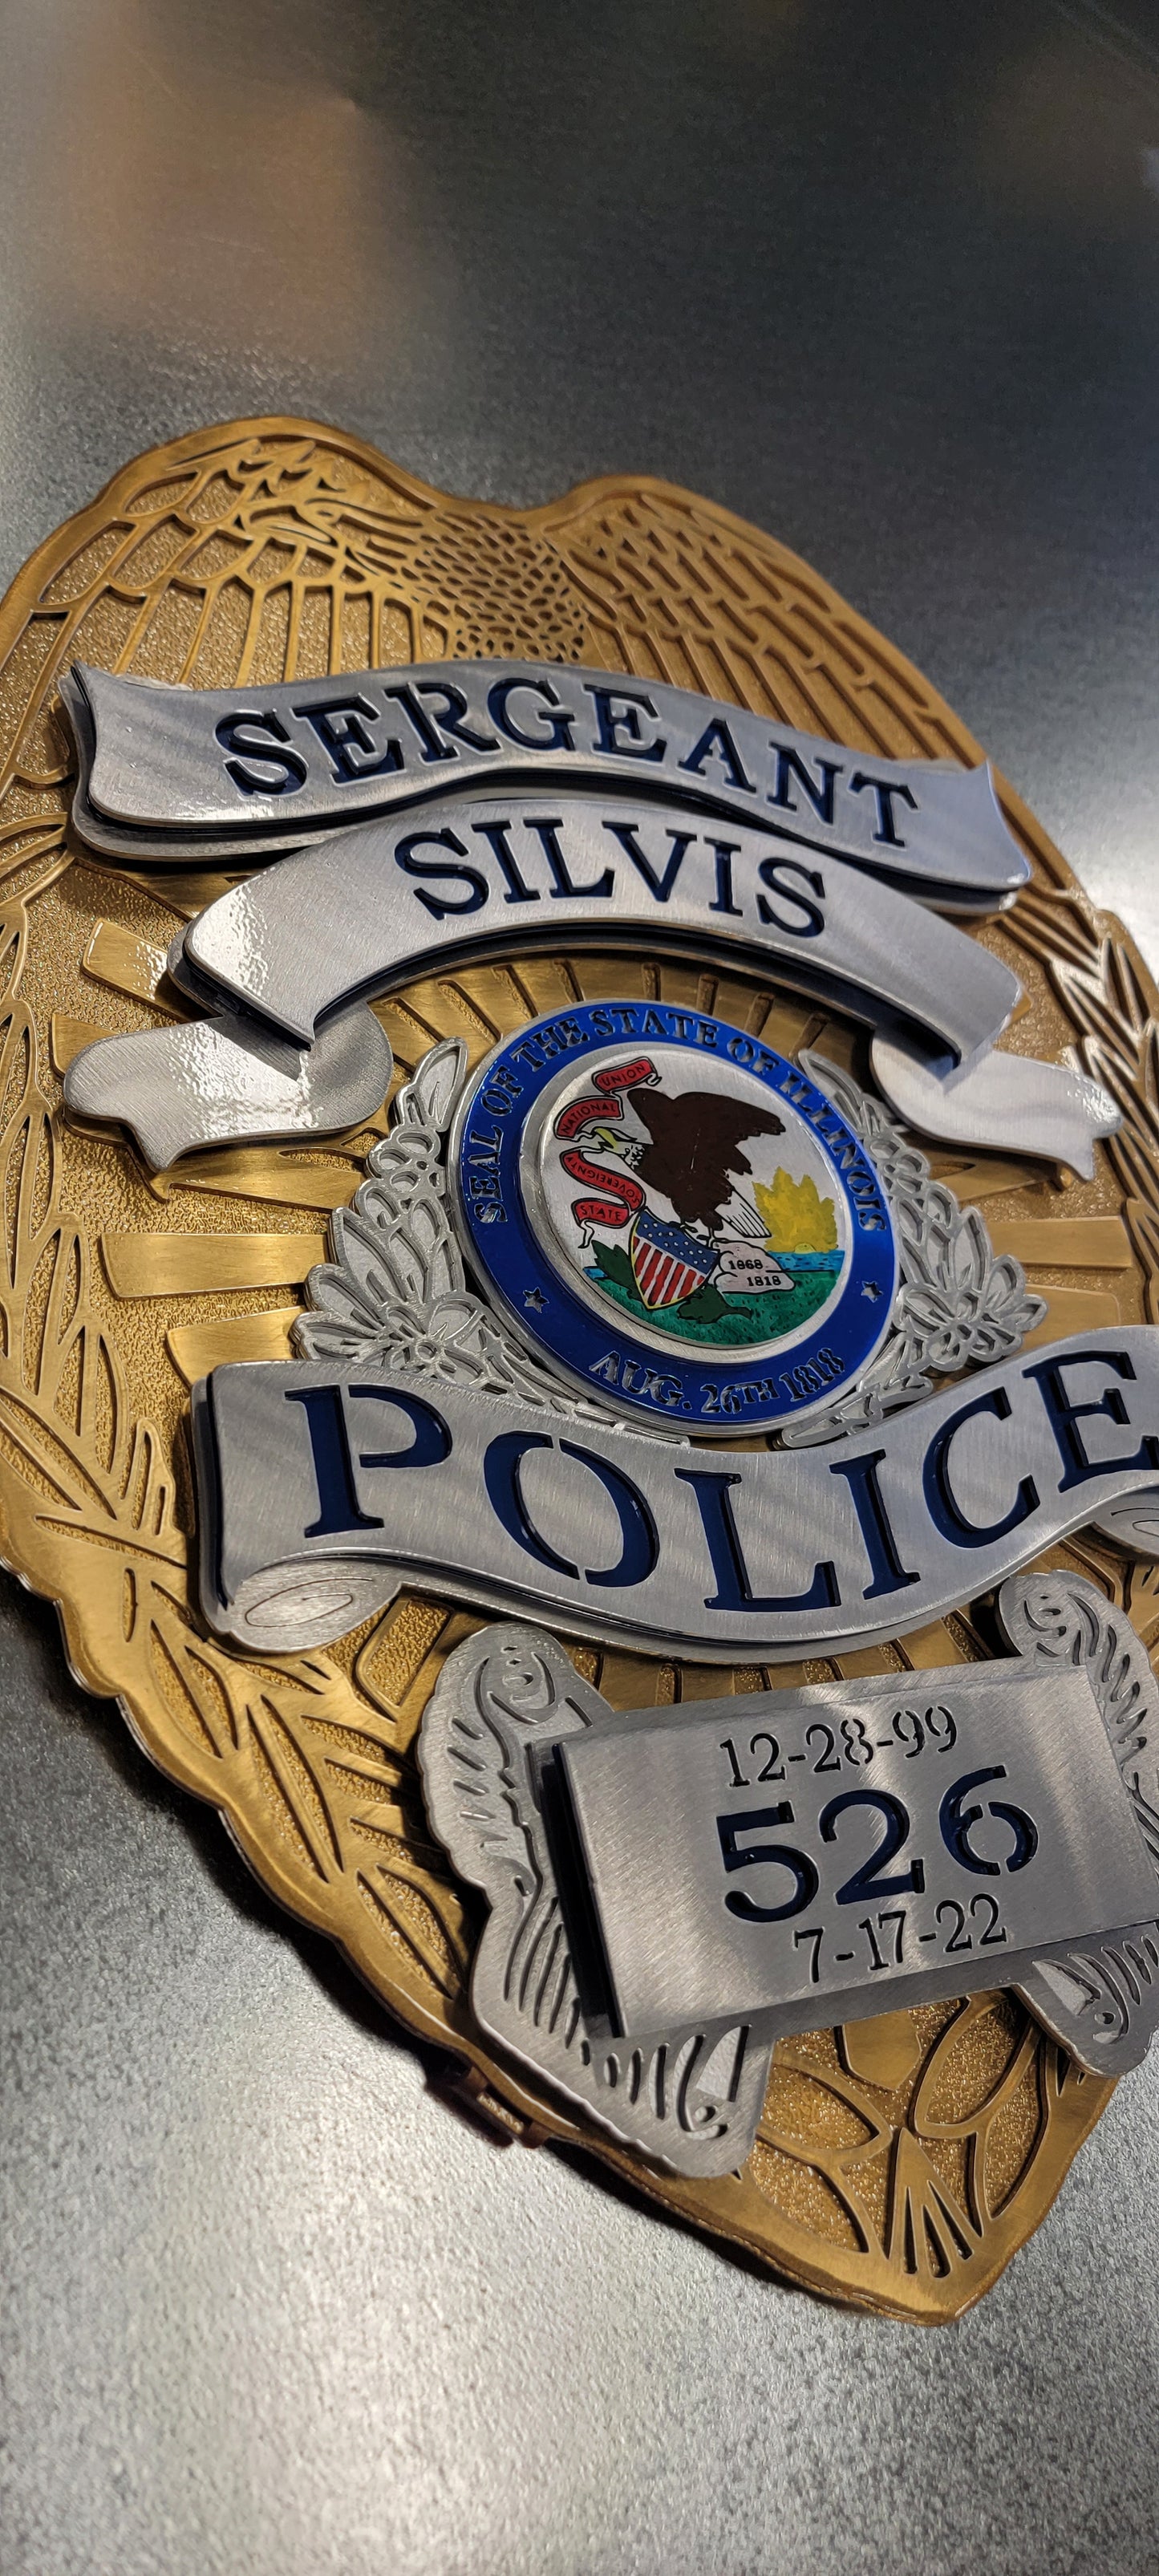 Sergeant Silvis Police Badge